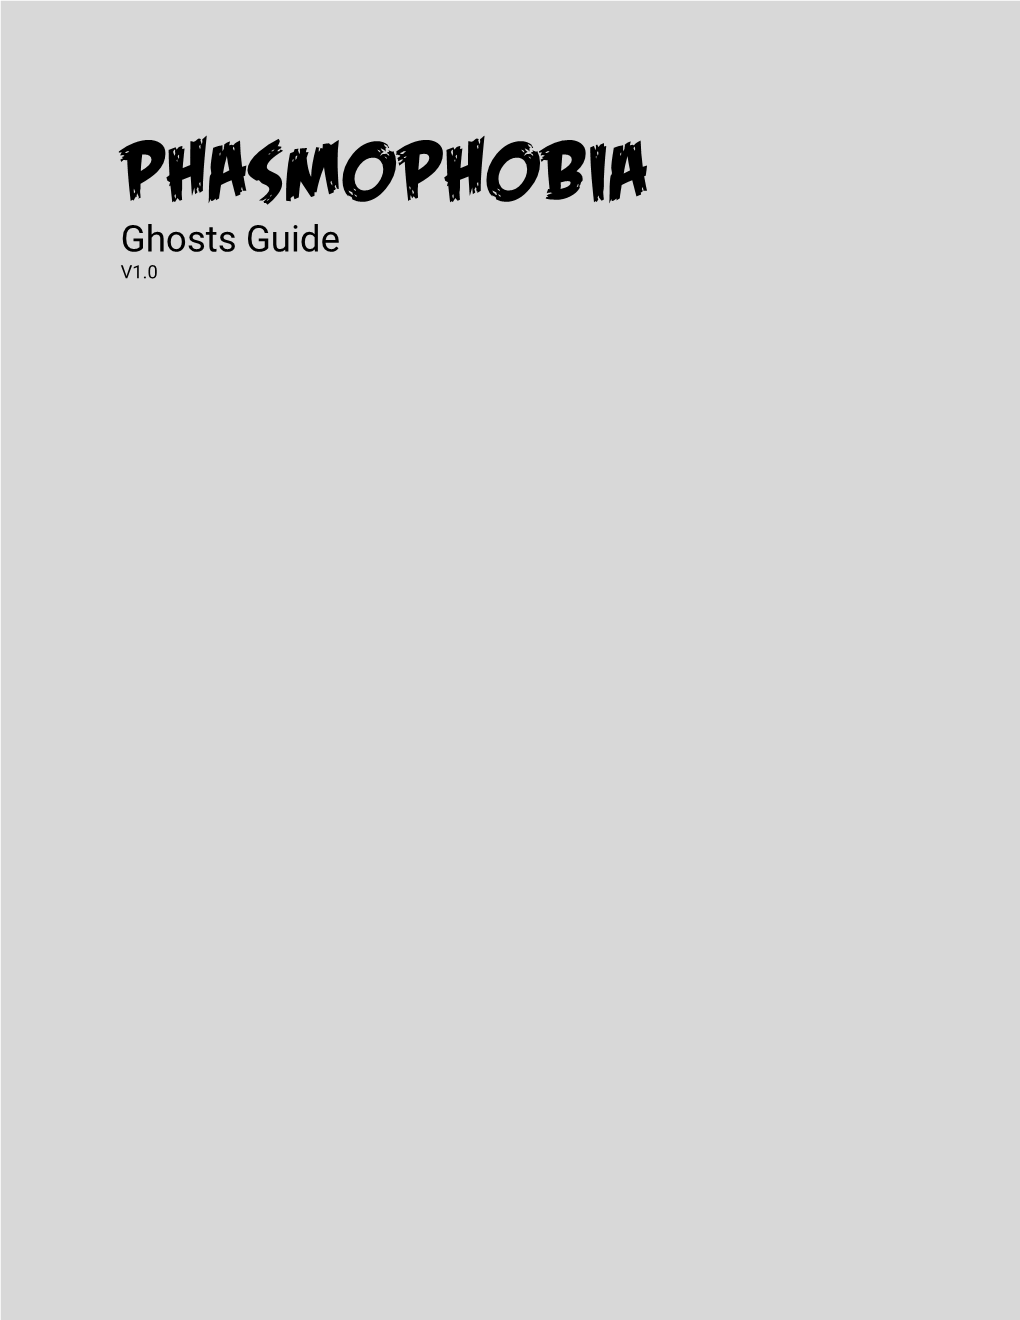 Phasmophobia Ghosts Guide V1.0